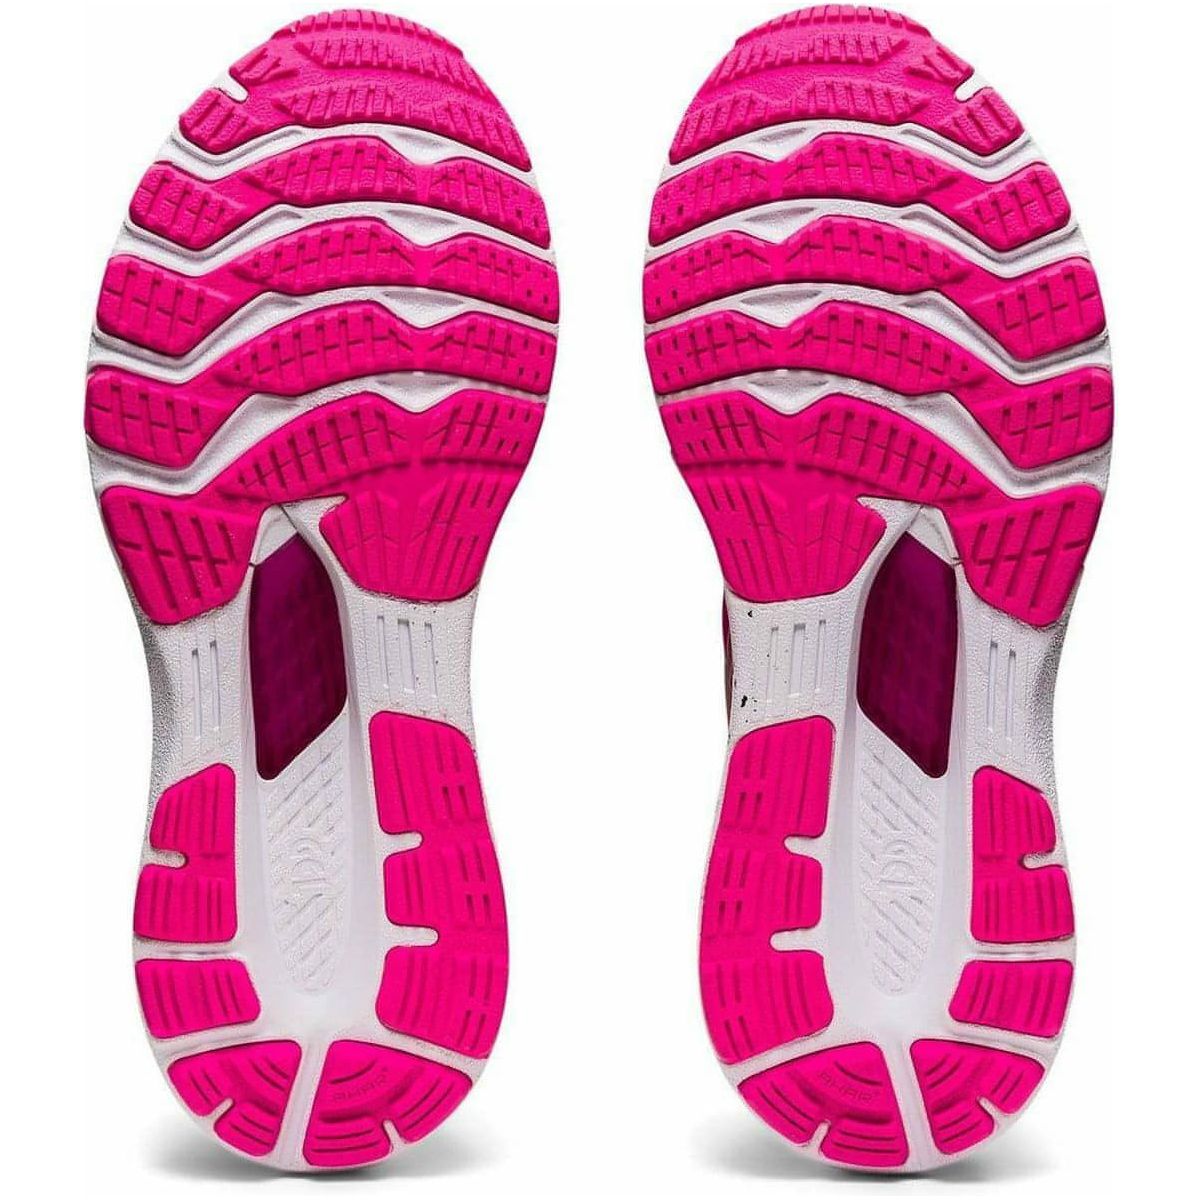 Asics Gel Kayano 28 Womens Running Shoes - Pink - Start Fitness